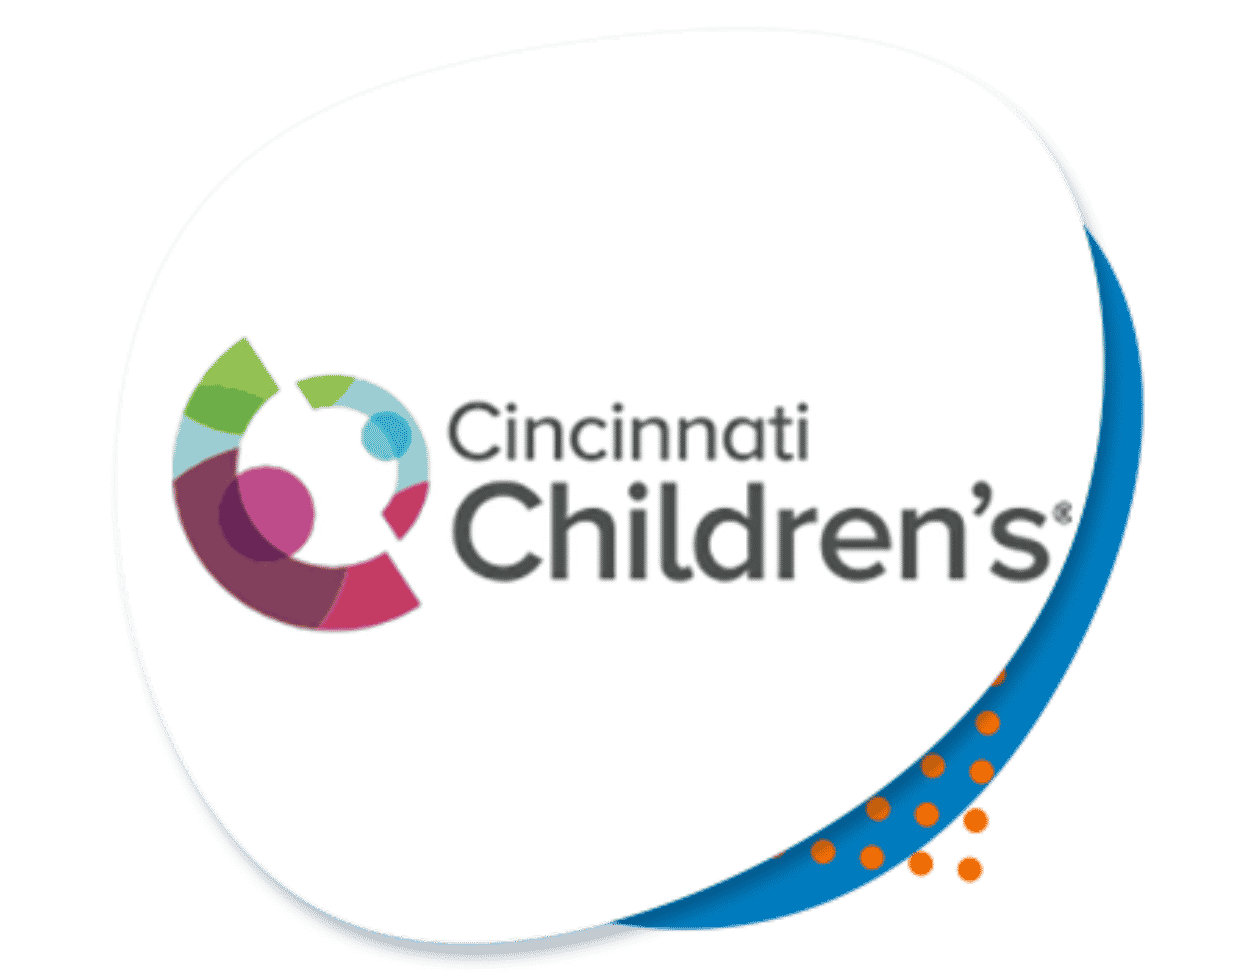 Cincinnati Children's Hospital logo - AbleGamers partnered with Cincinnati Children’s